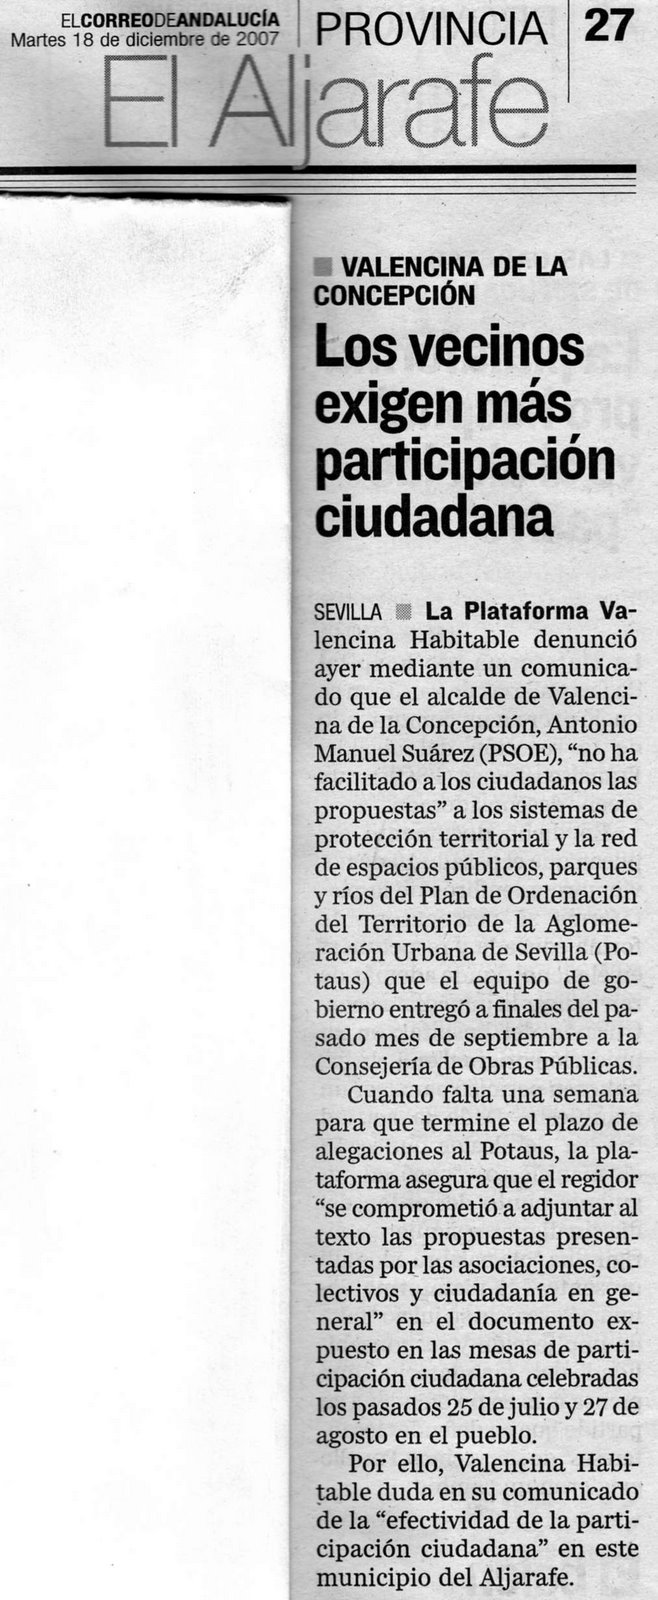 [2007+12+18+CORREO+ANDALUCÃ A+VALENCINA+EXIGEN+MÃ S+PARTICIPACIÃ“N+CIUDADANA.jpg]